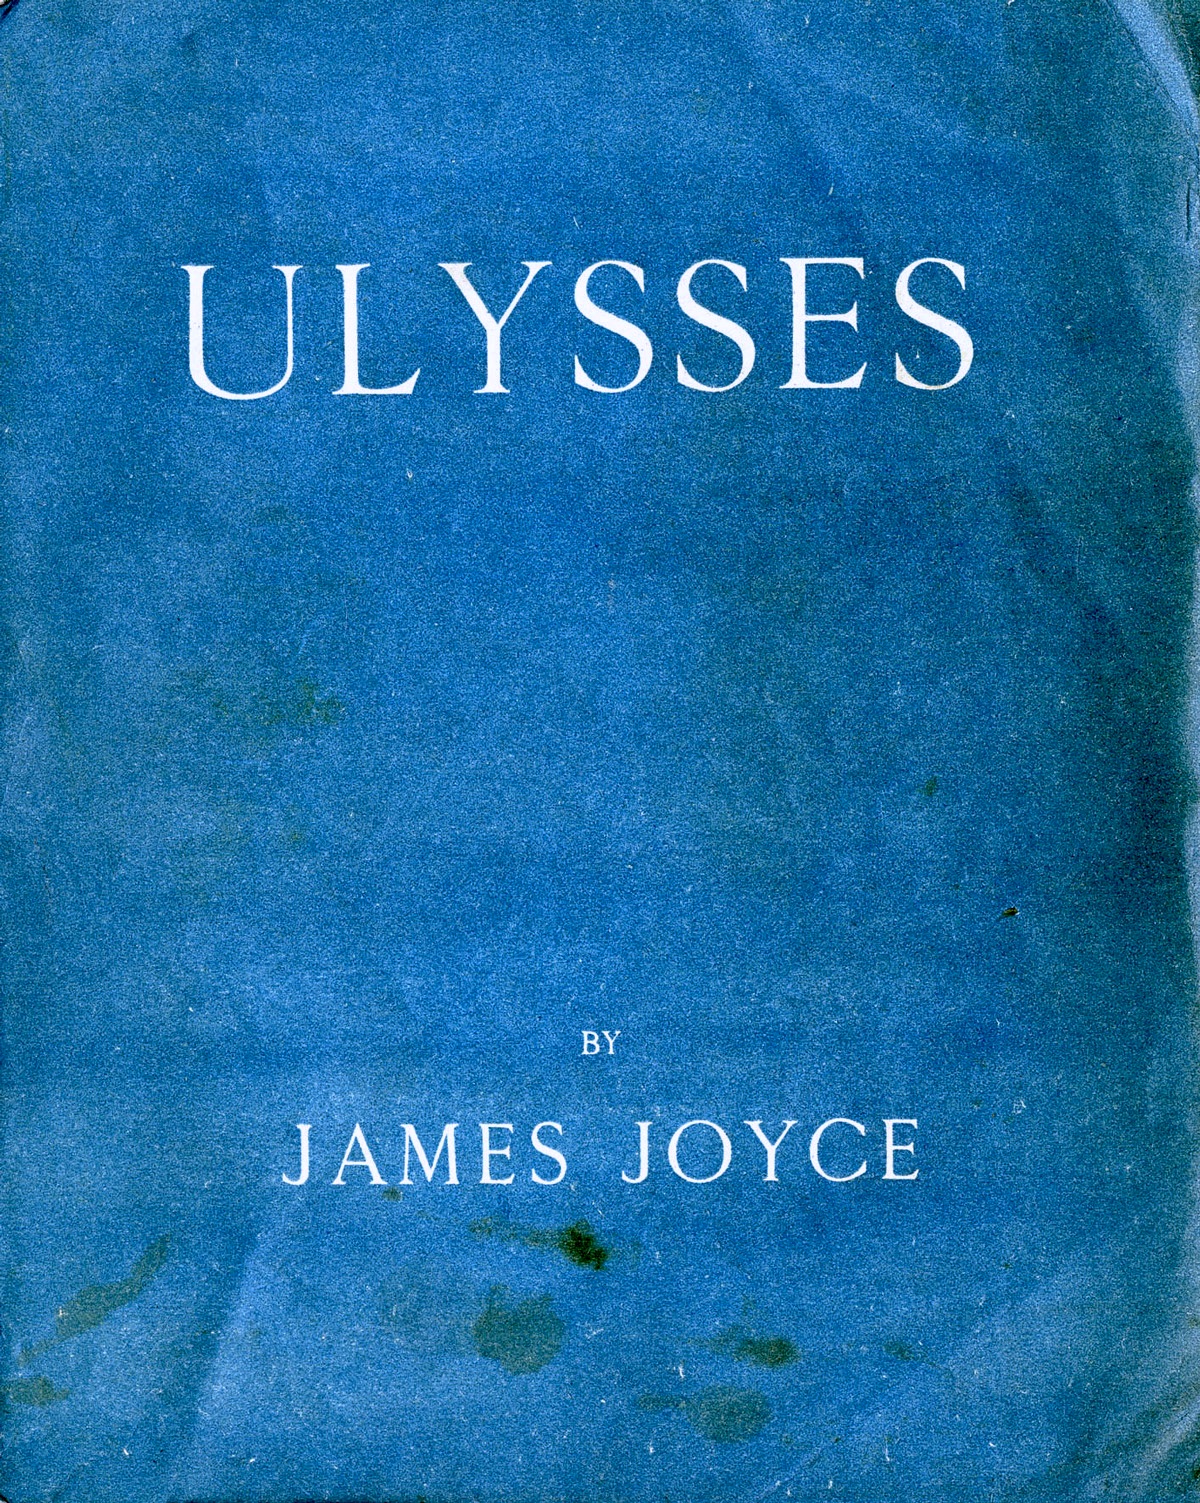 James Joyce: Ulysses. (1968, Penguin)